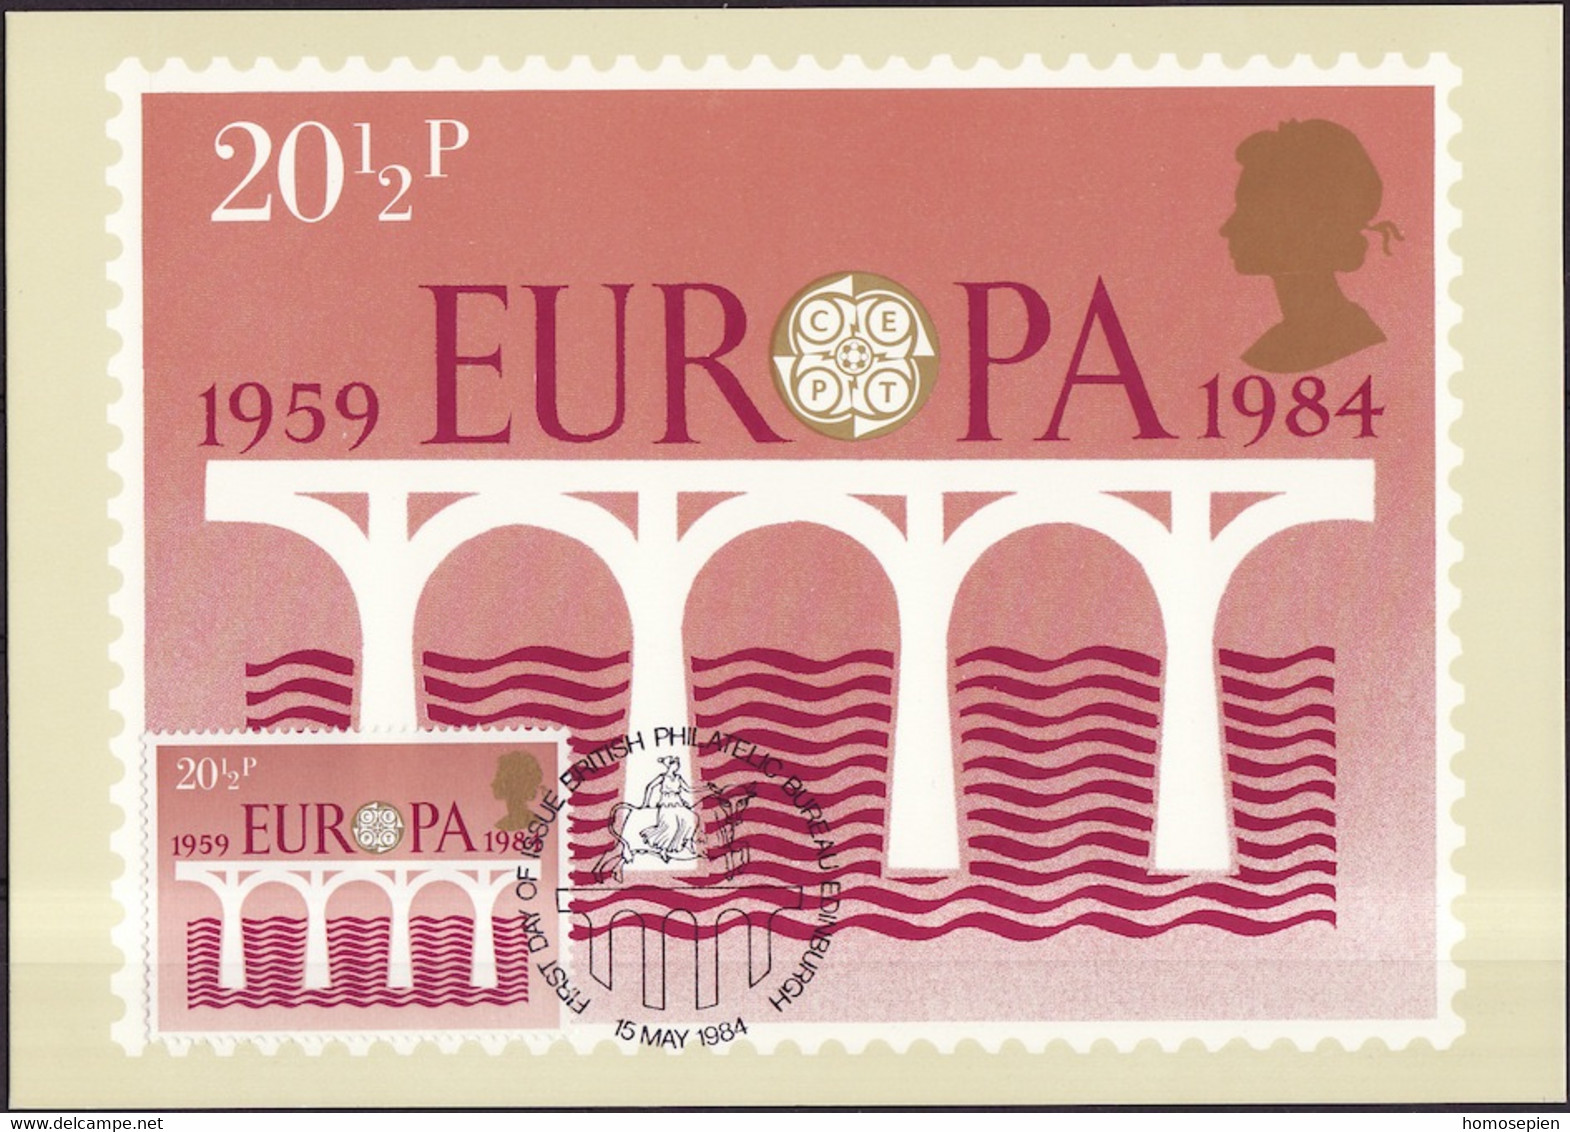 Grande Bretagne - Great Britain - Großbritannien CM 1984 Y&T N°1128 - Michel N°990 - 20,5p EUROPA - Maximumkarten (MC)